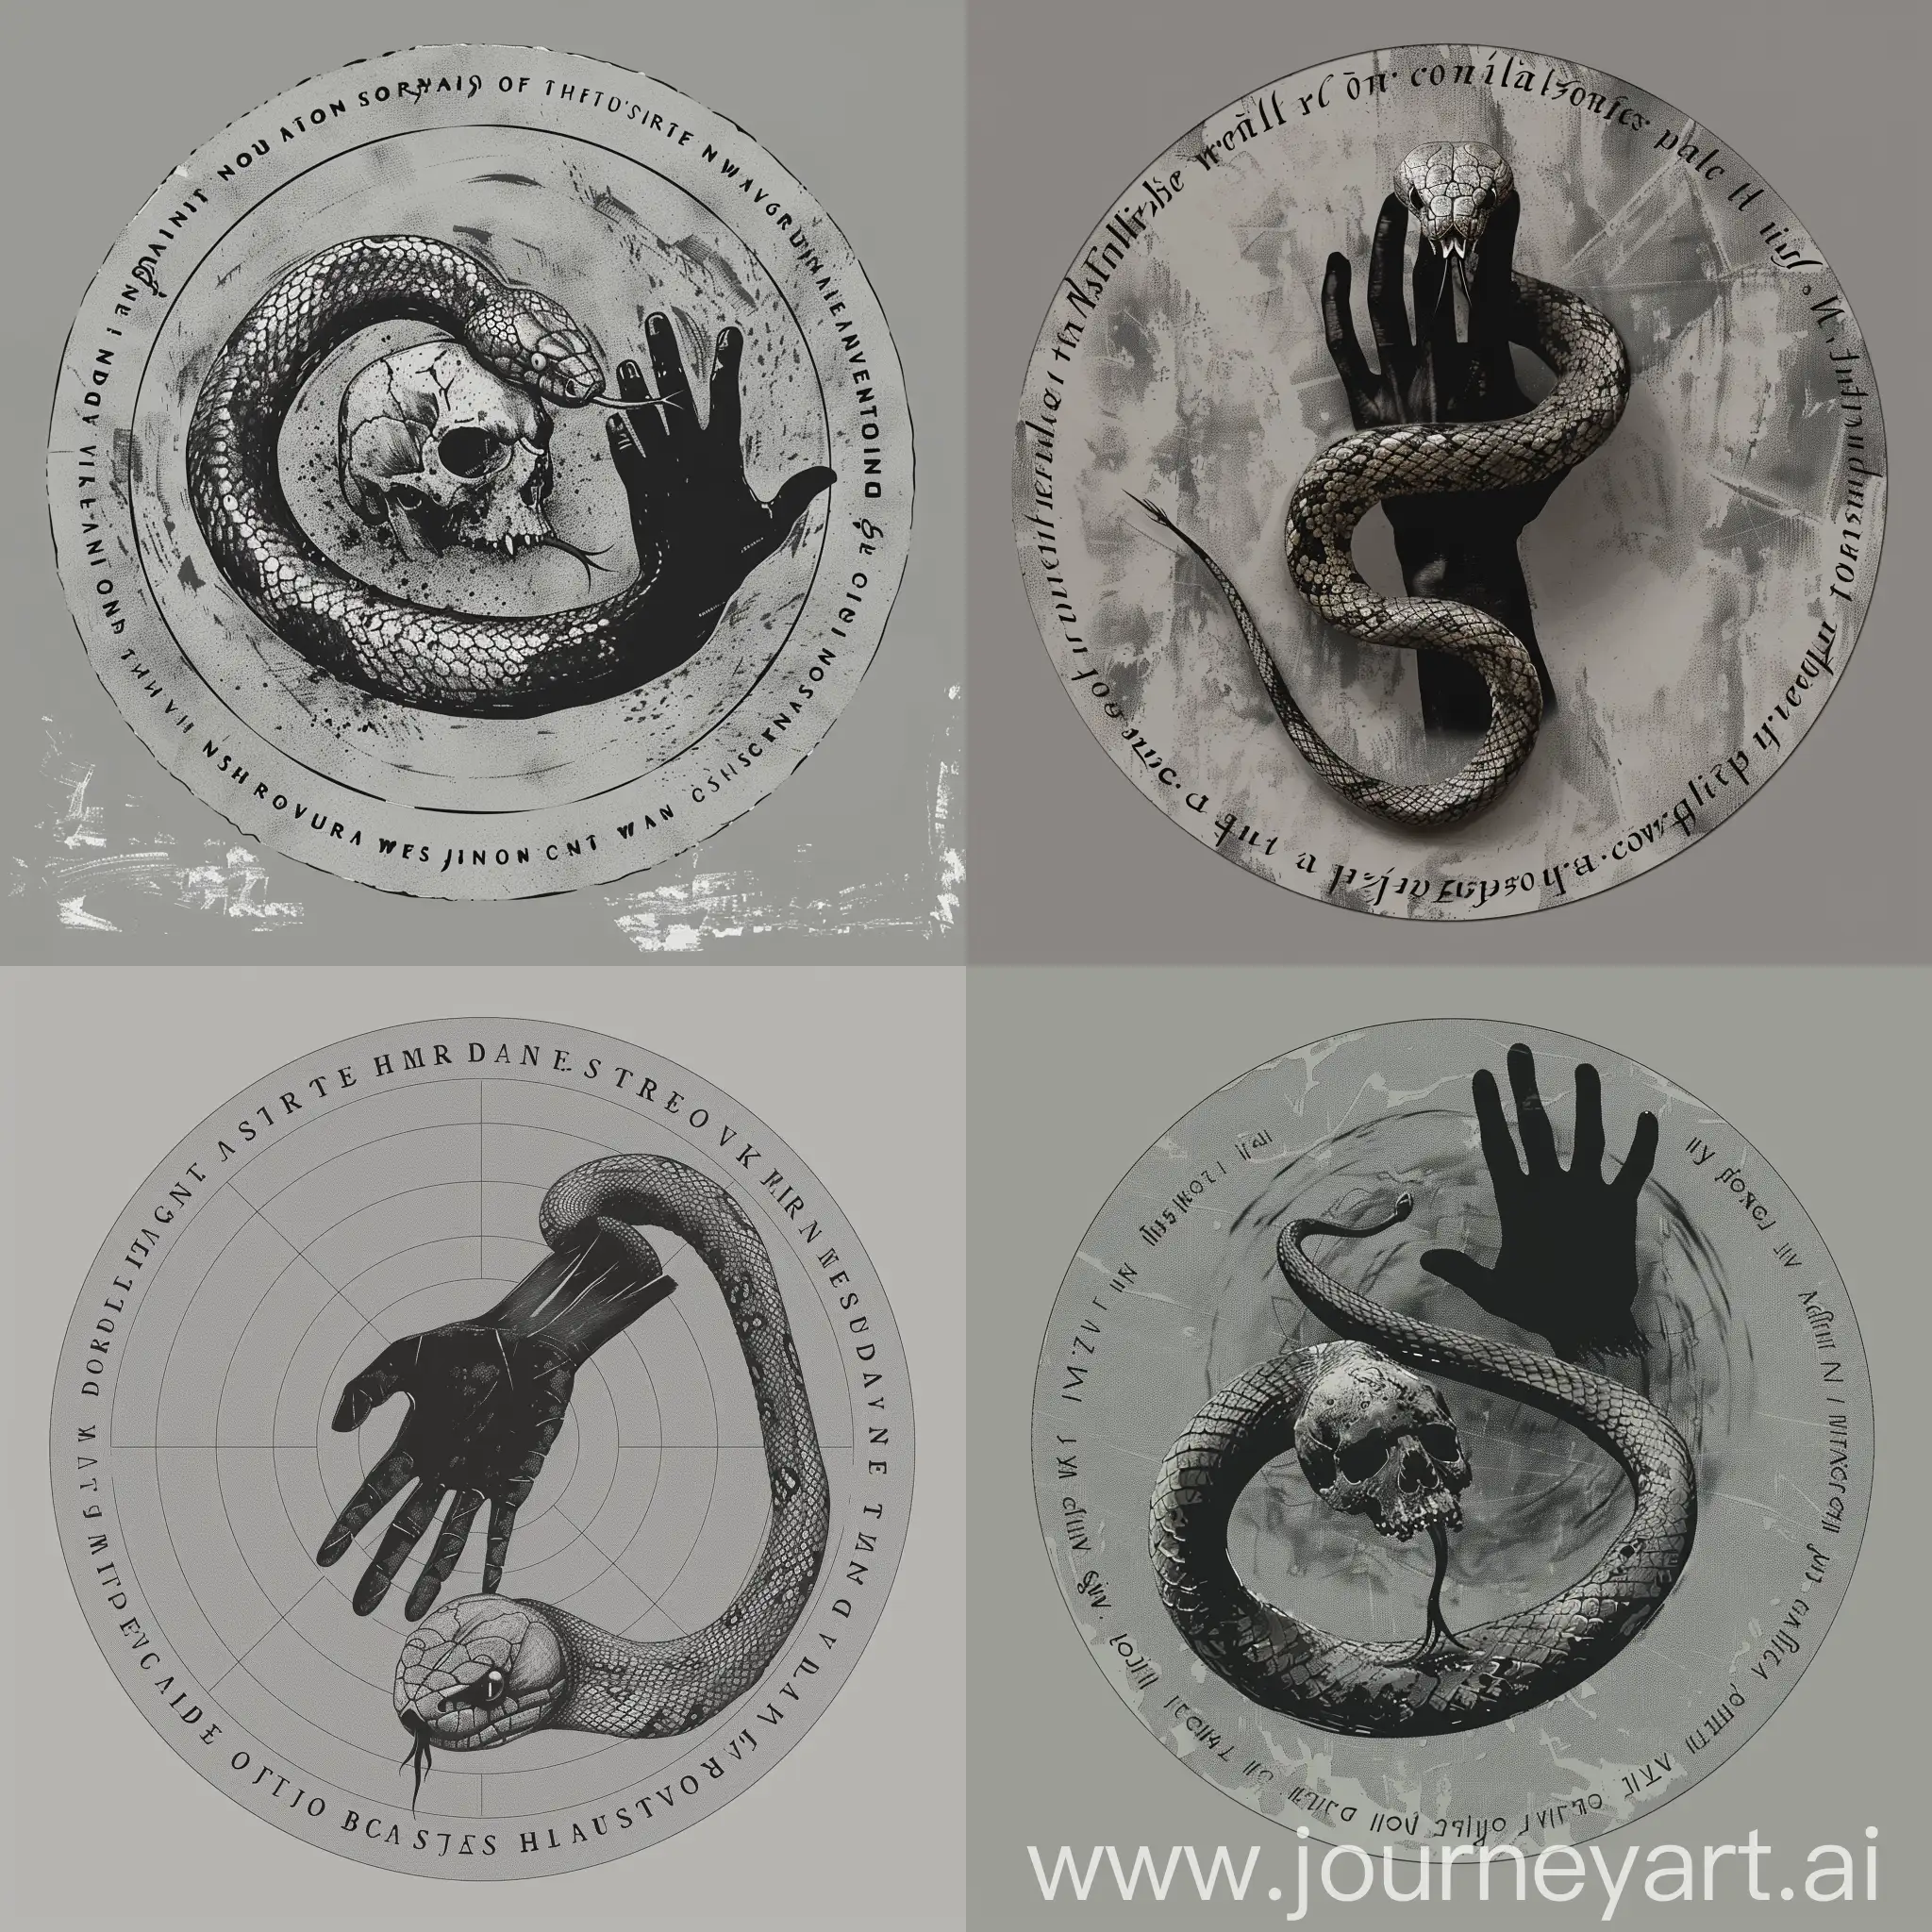 Minimalistic-Snake-Skull-Circle-Art-on-Gray-Background-with-Handwritten-Black-Text